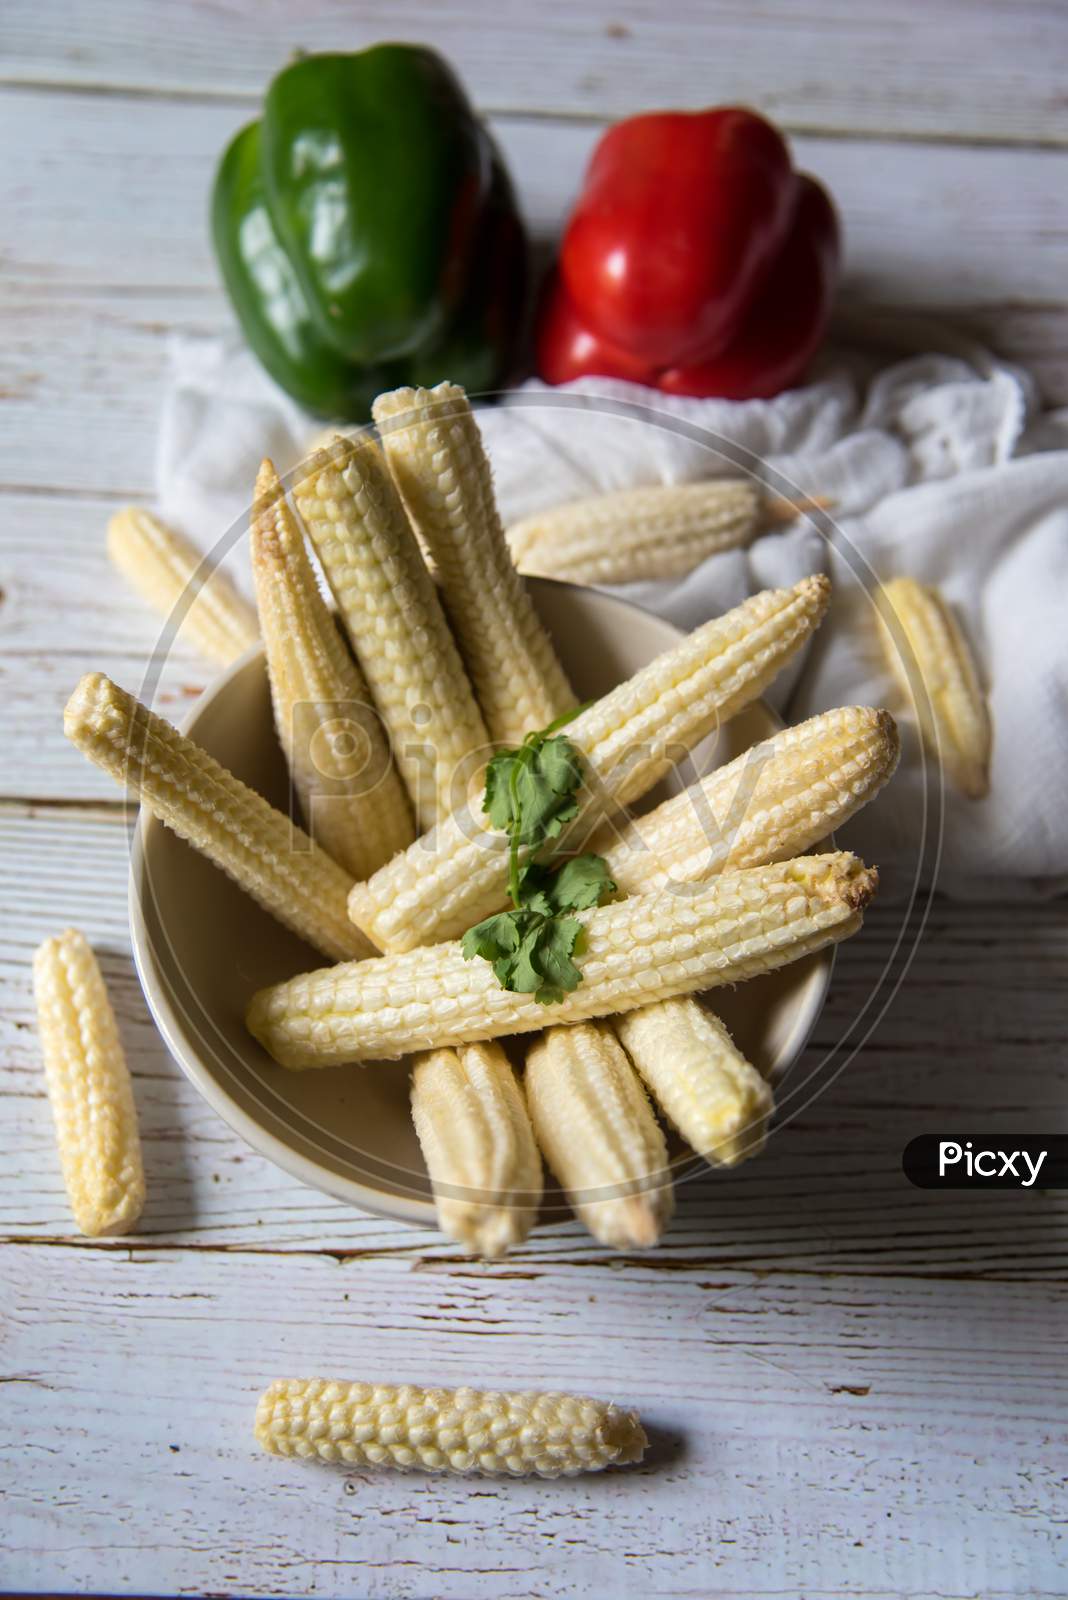 Healthy food raw ingredients baby corn and vegetables